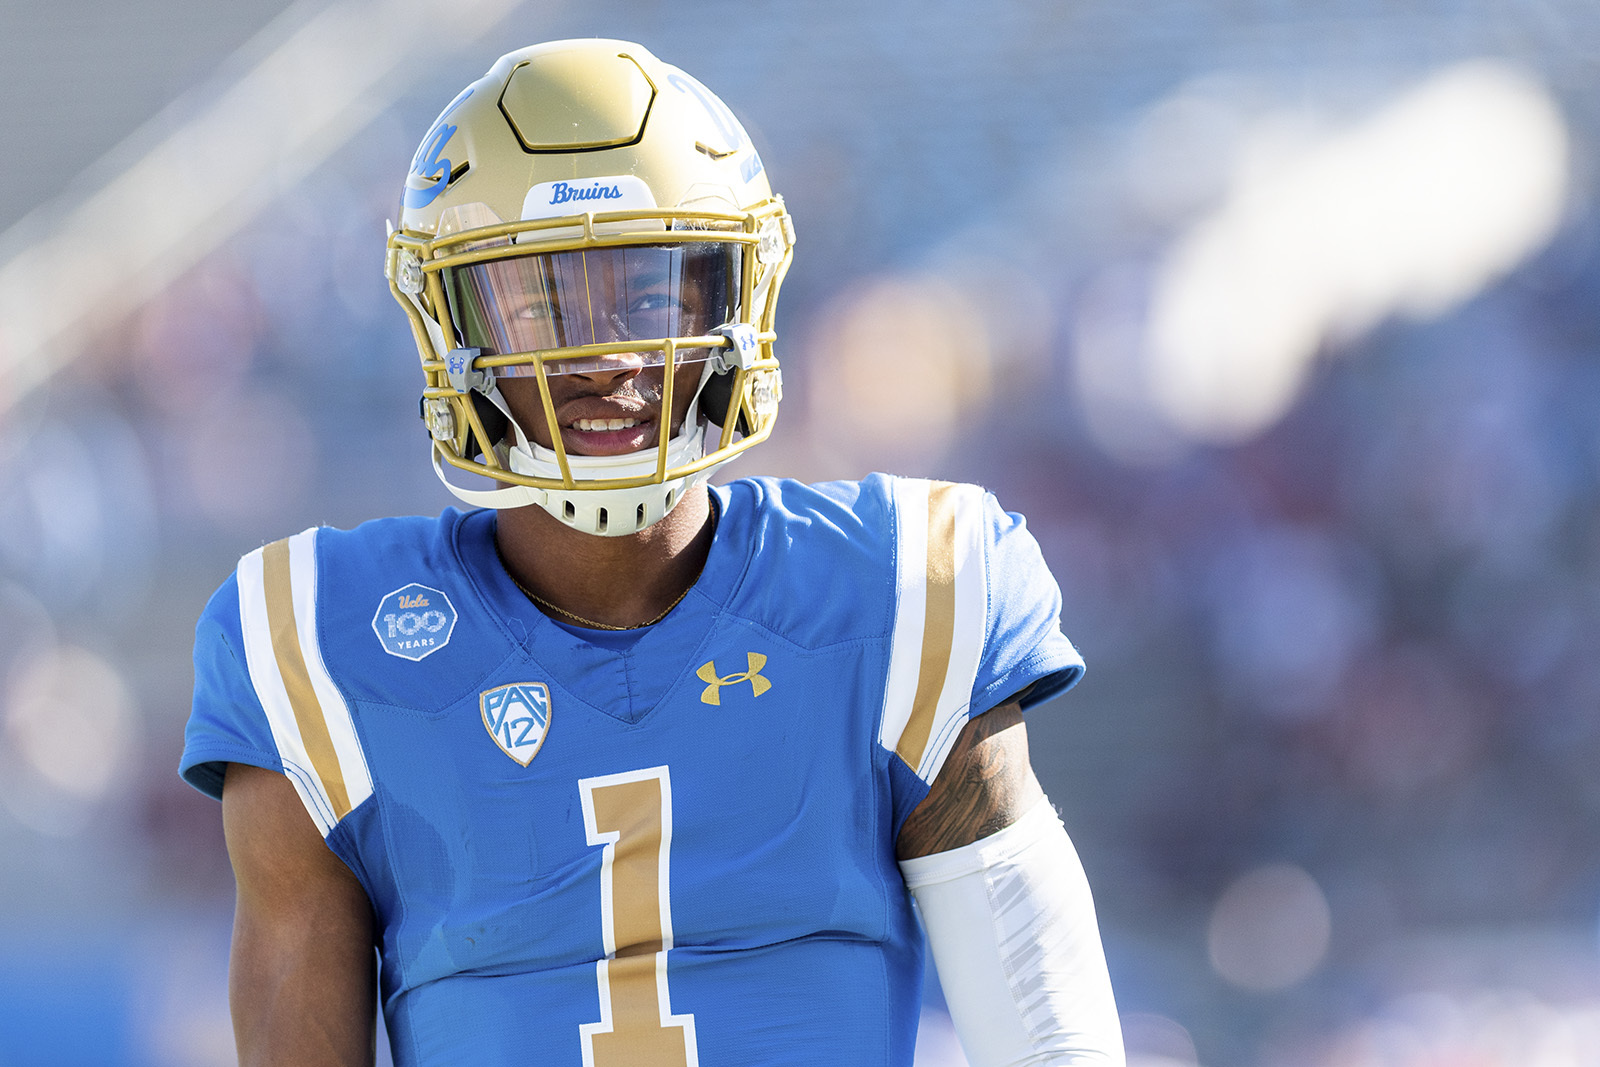 UCLA football debuts Jordan Brand revamp of iconic uniforms for